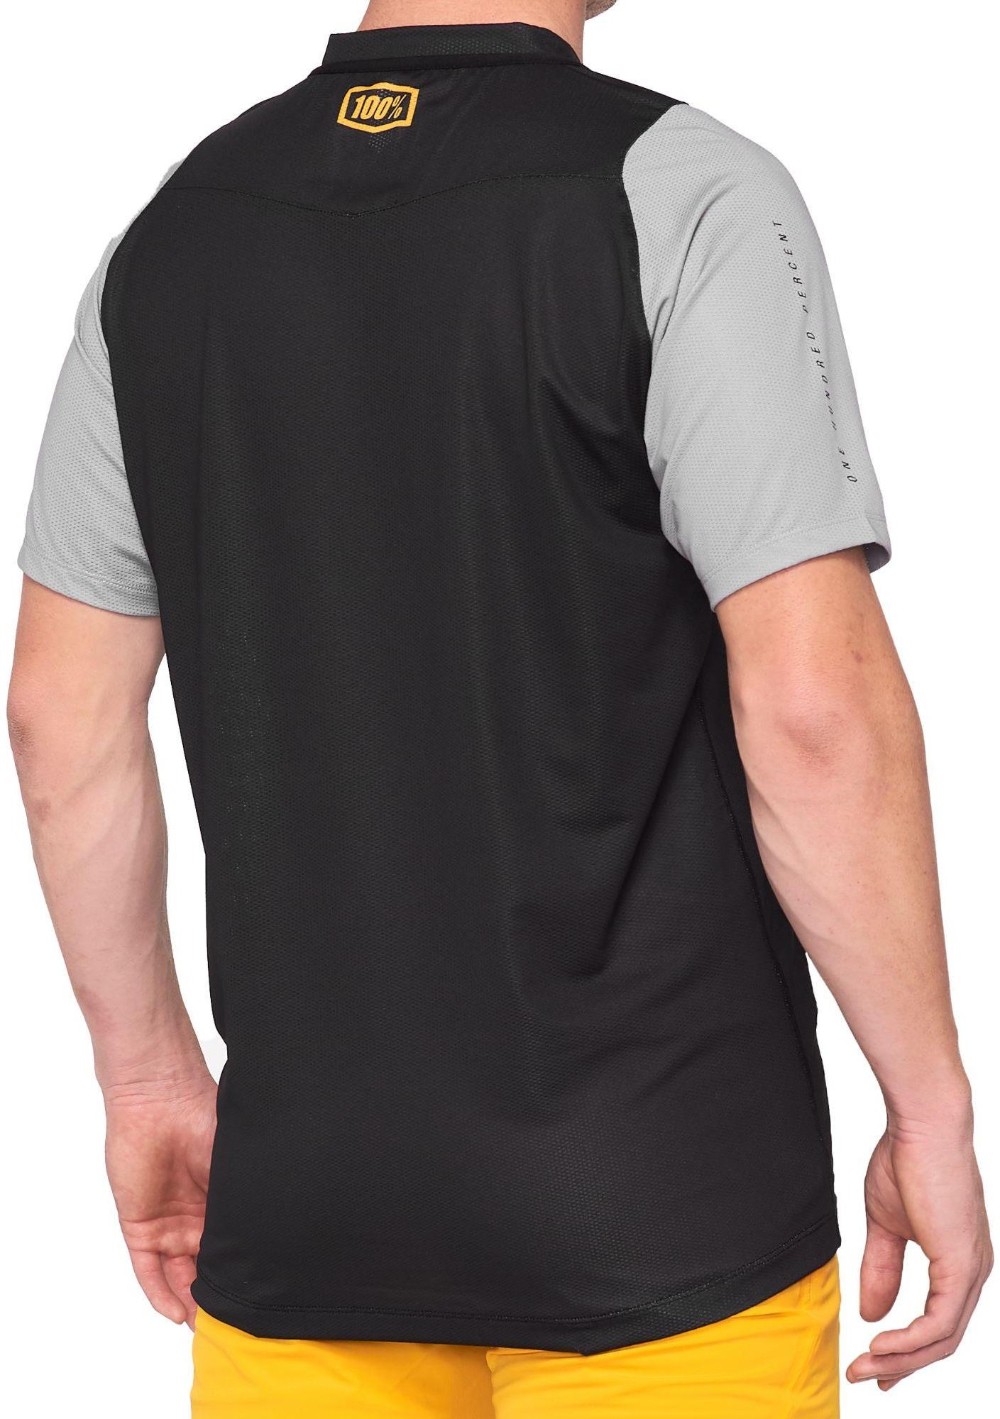 Celium Short Sleeve Jersey image 1